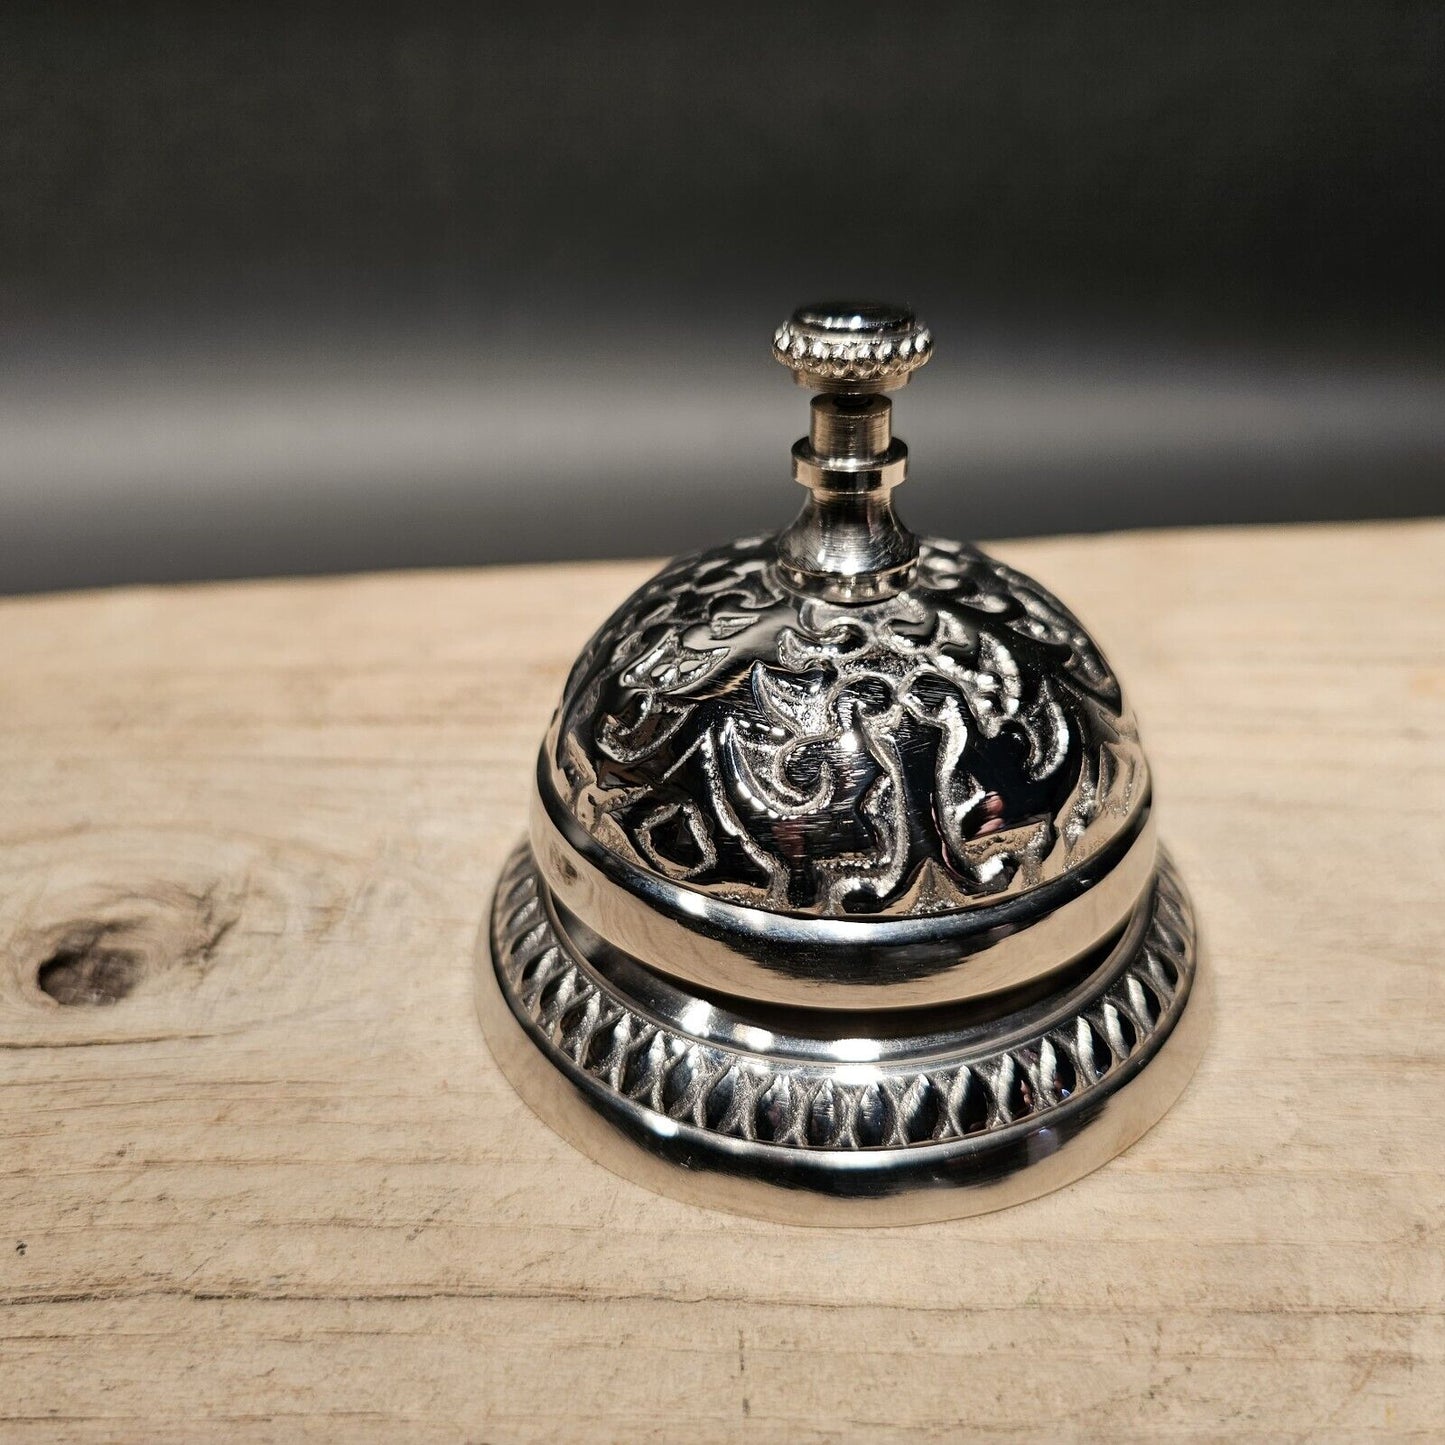 3 1/4" Antique Vintage Style Ornate Silver Brass Table Desk Bell